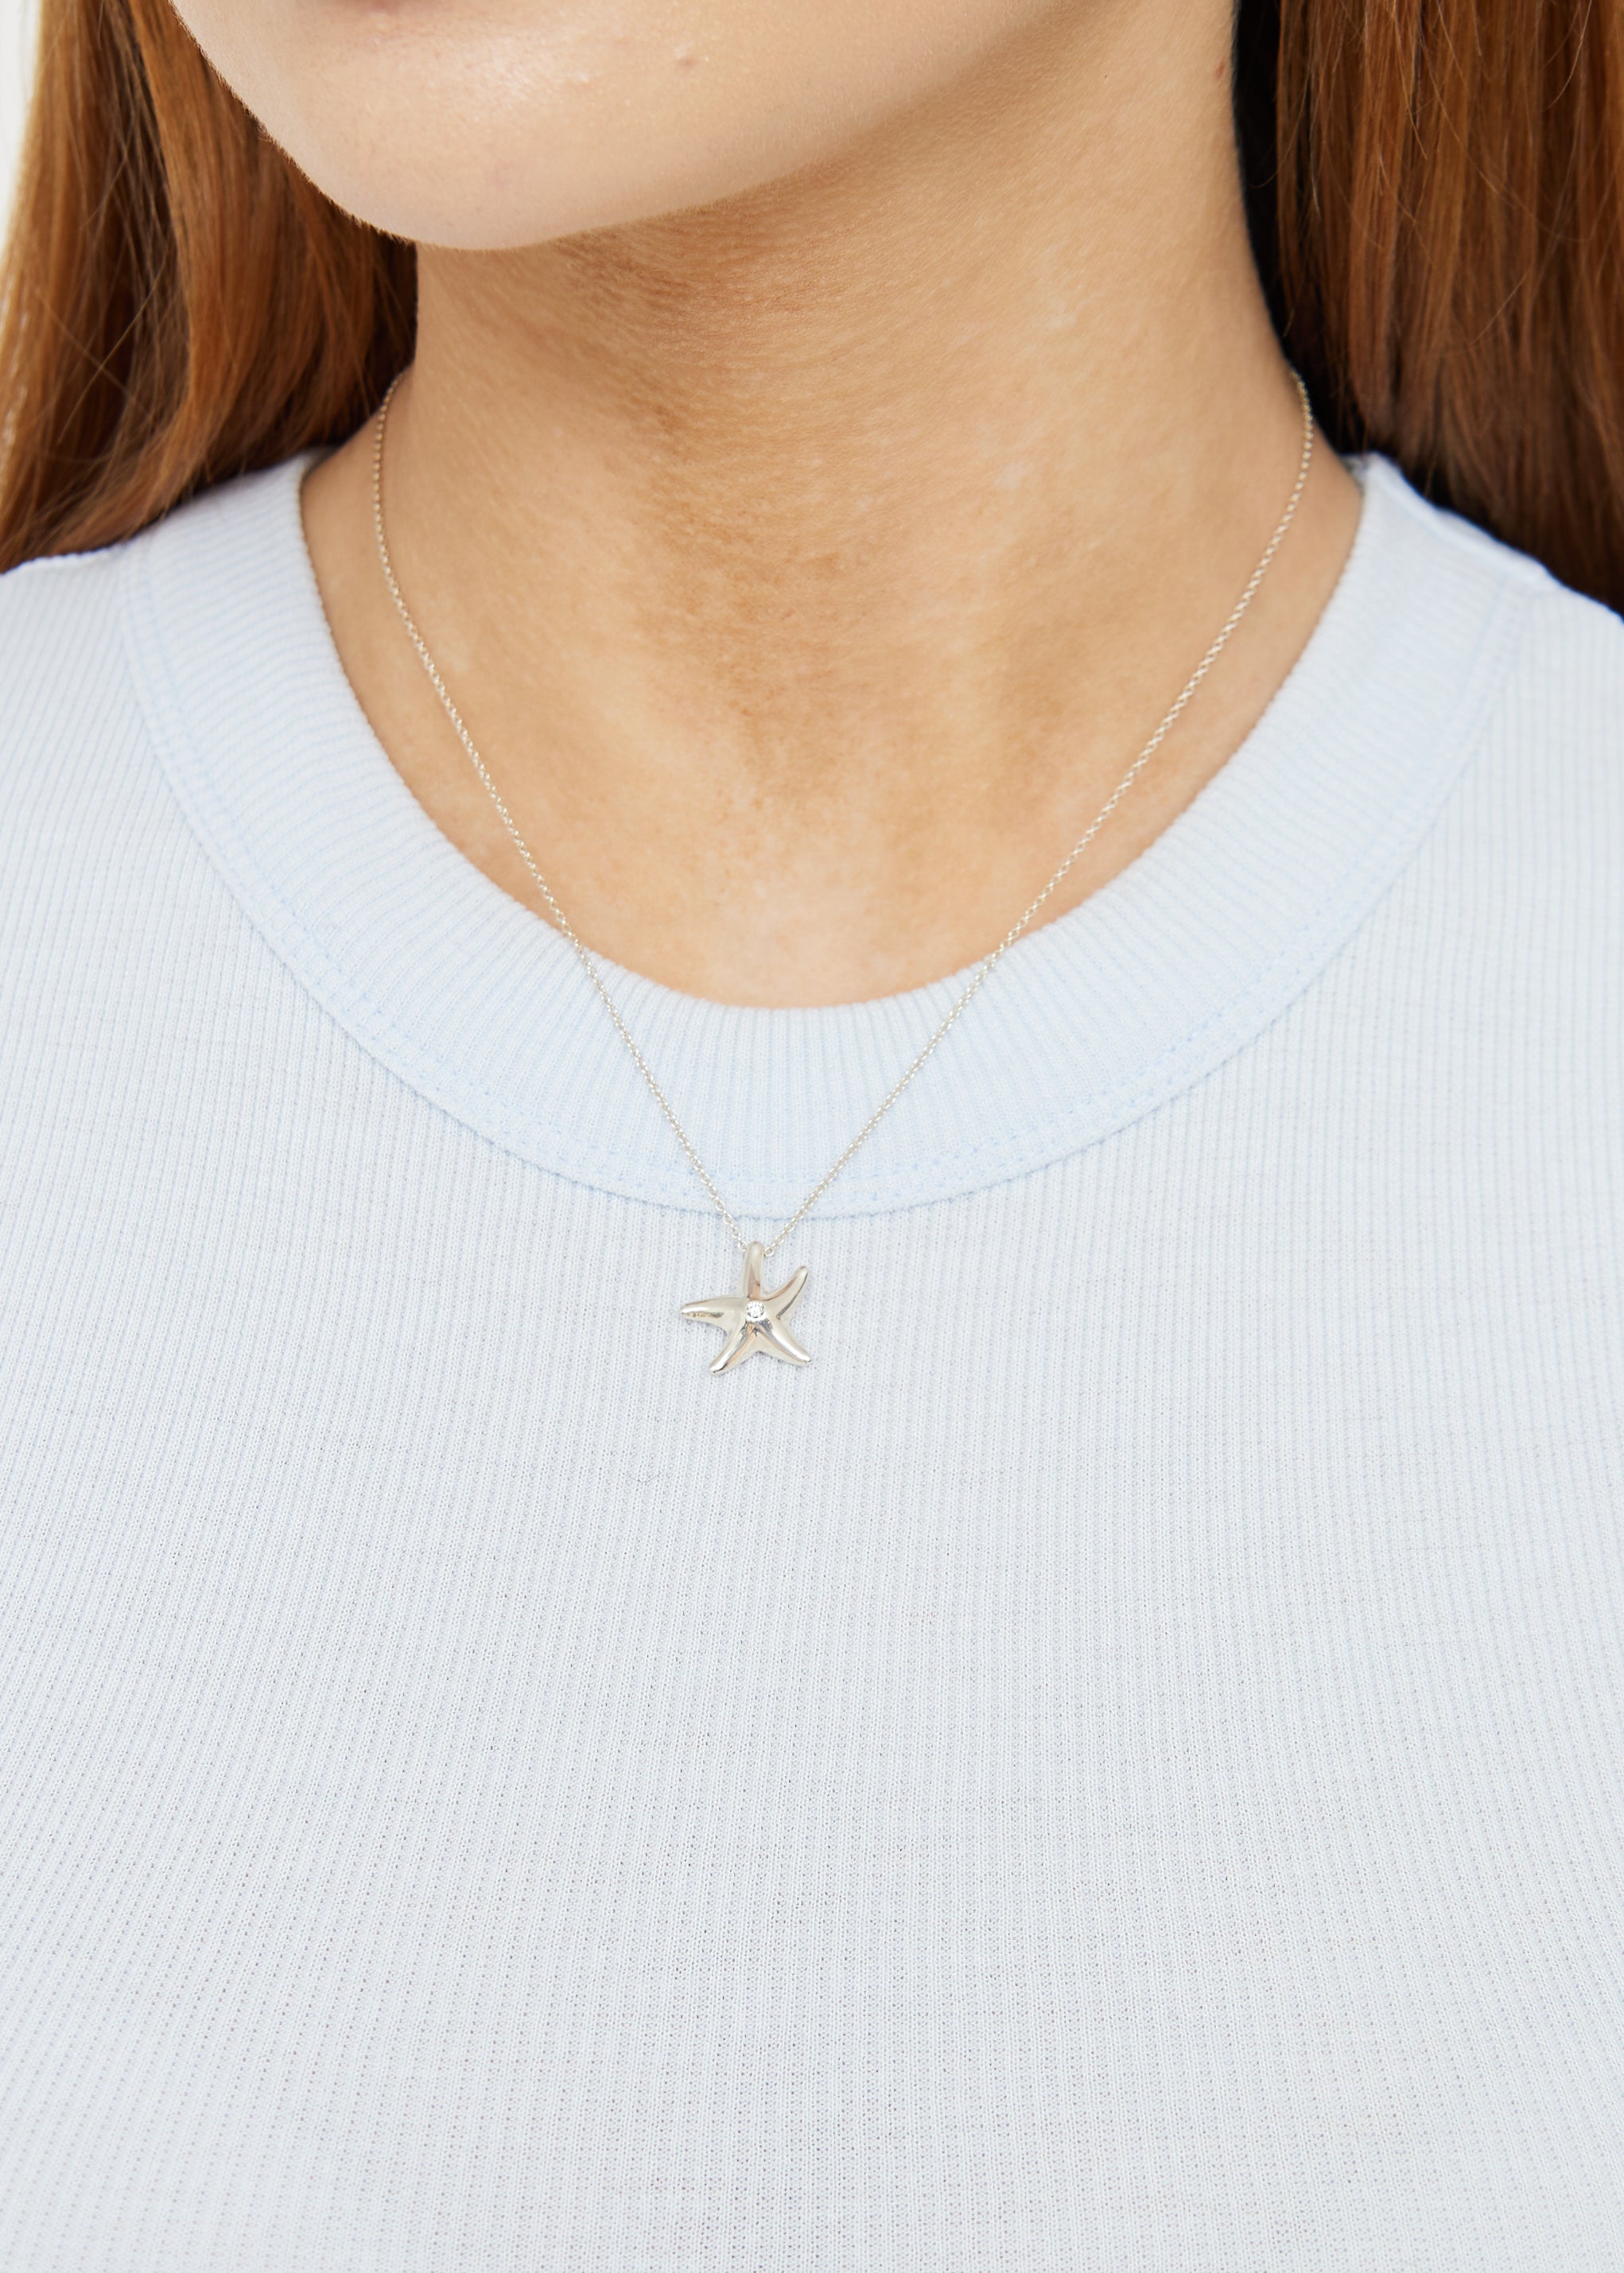 Starfish Necklace - gold and diamond large starfish pendant –  caligodesign.com